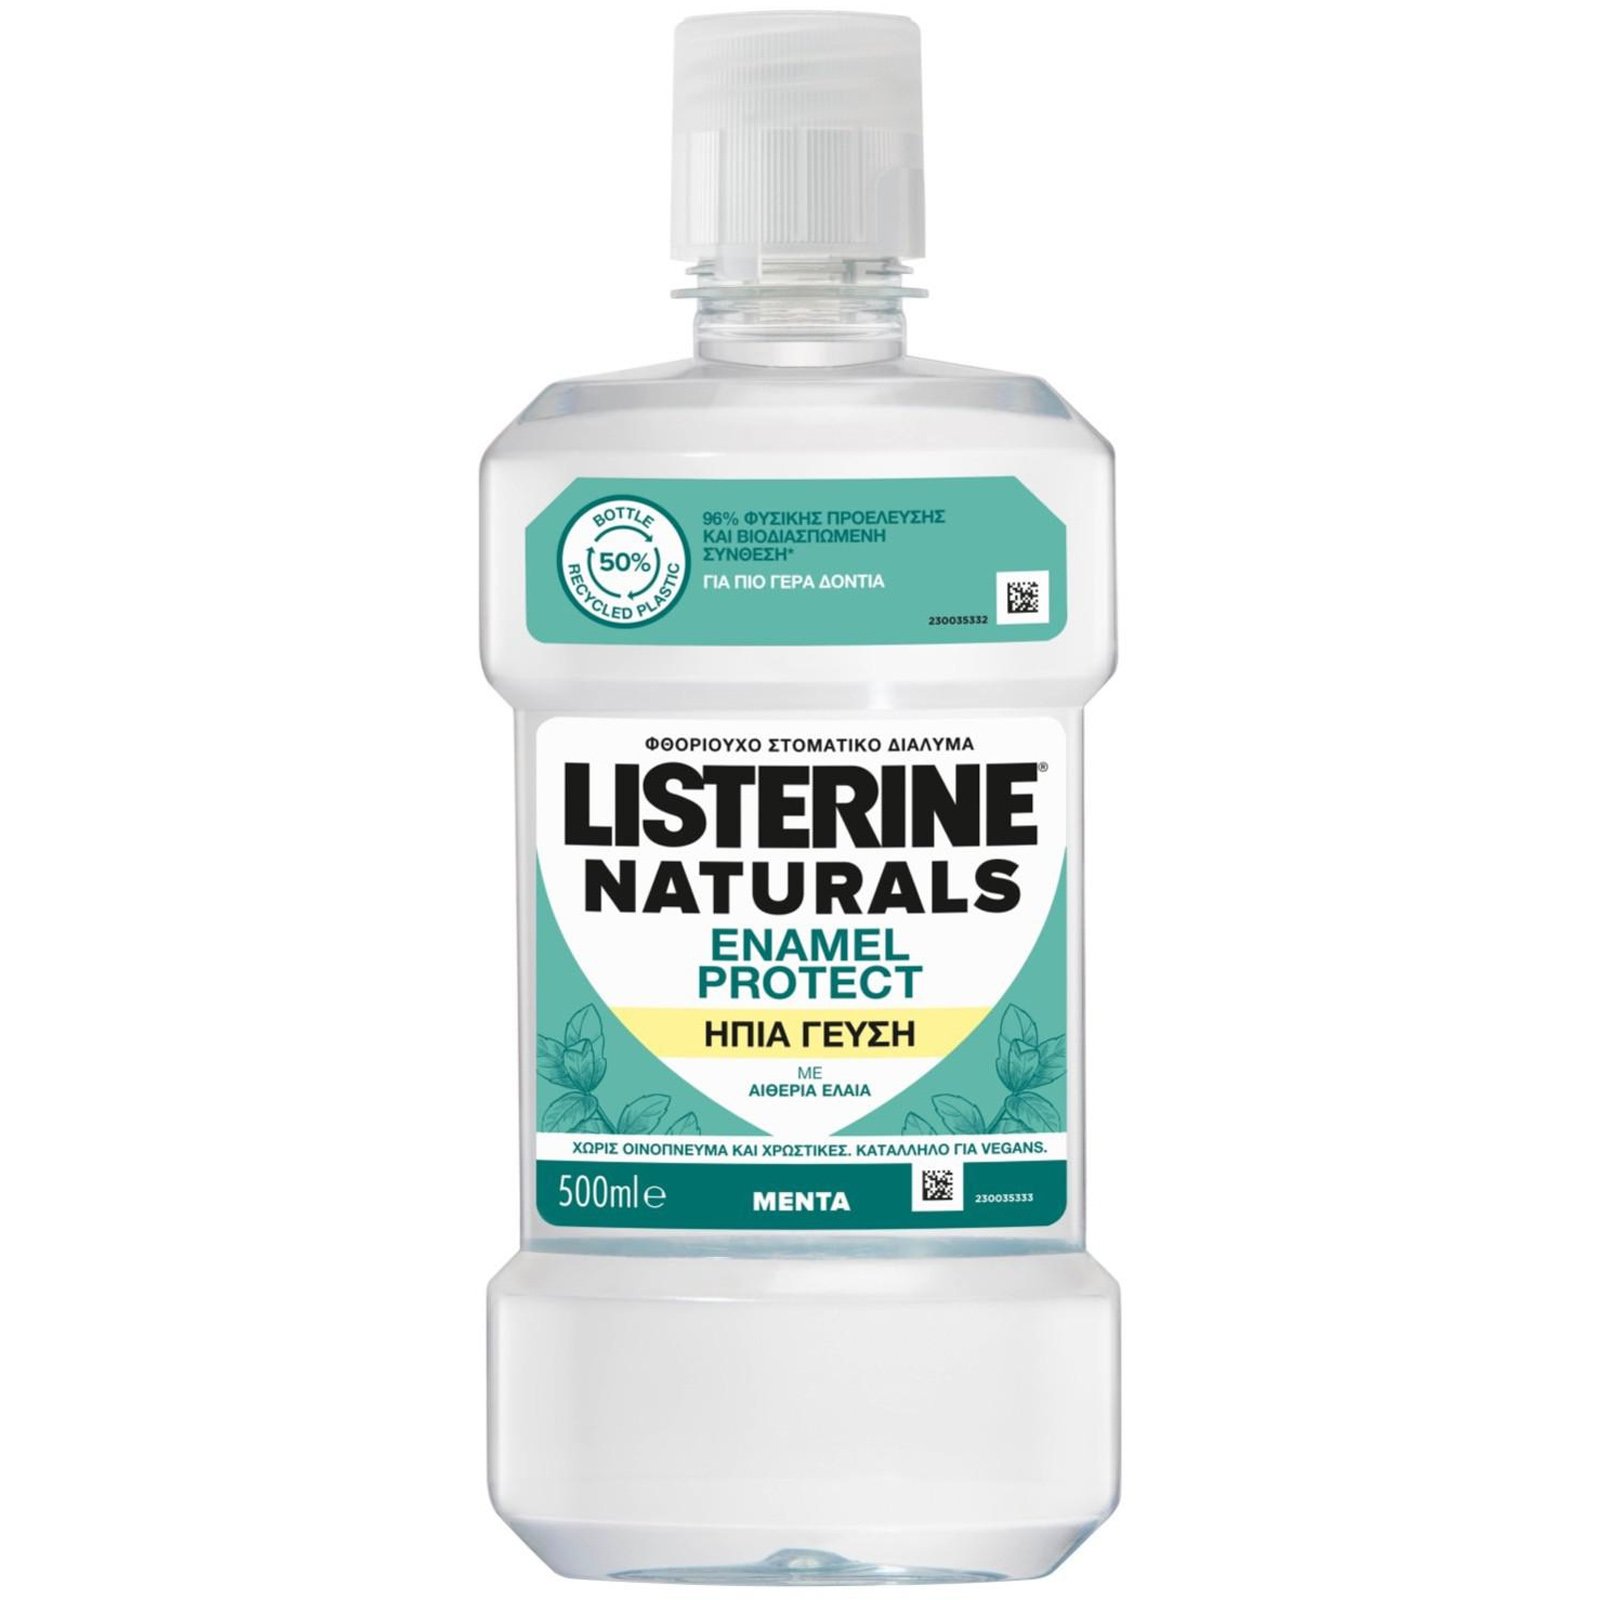 Listerine Naturals Enamel Protect Fluoride Mouthwash Φθοριούχο Στοματικό Διάλυμα Χωρίς Οινόπνευμα & Χρωστικές με Ήπια Γεύση Μέντας 500ml